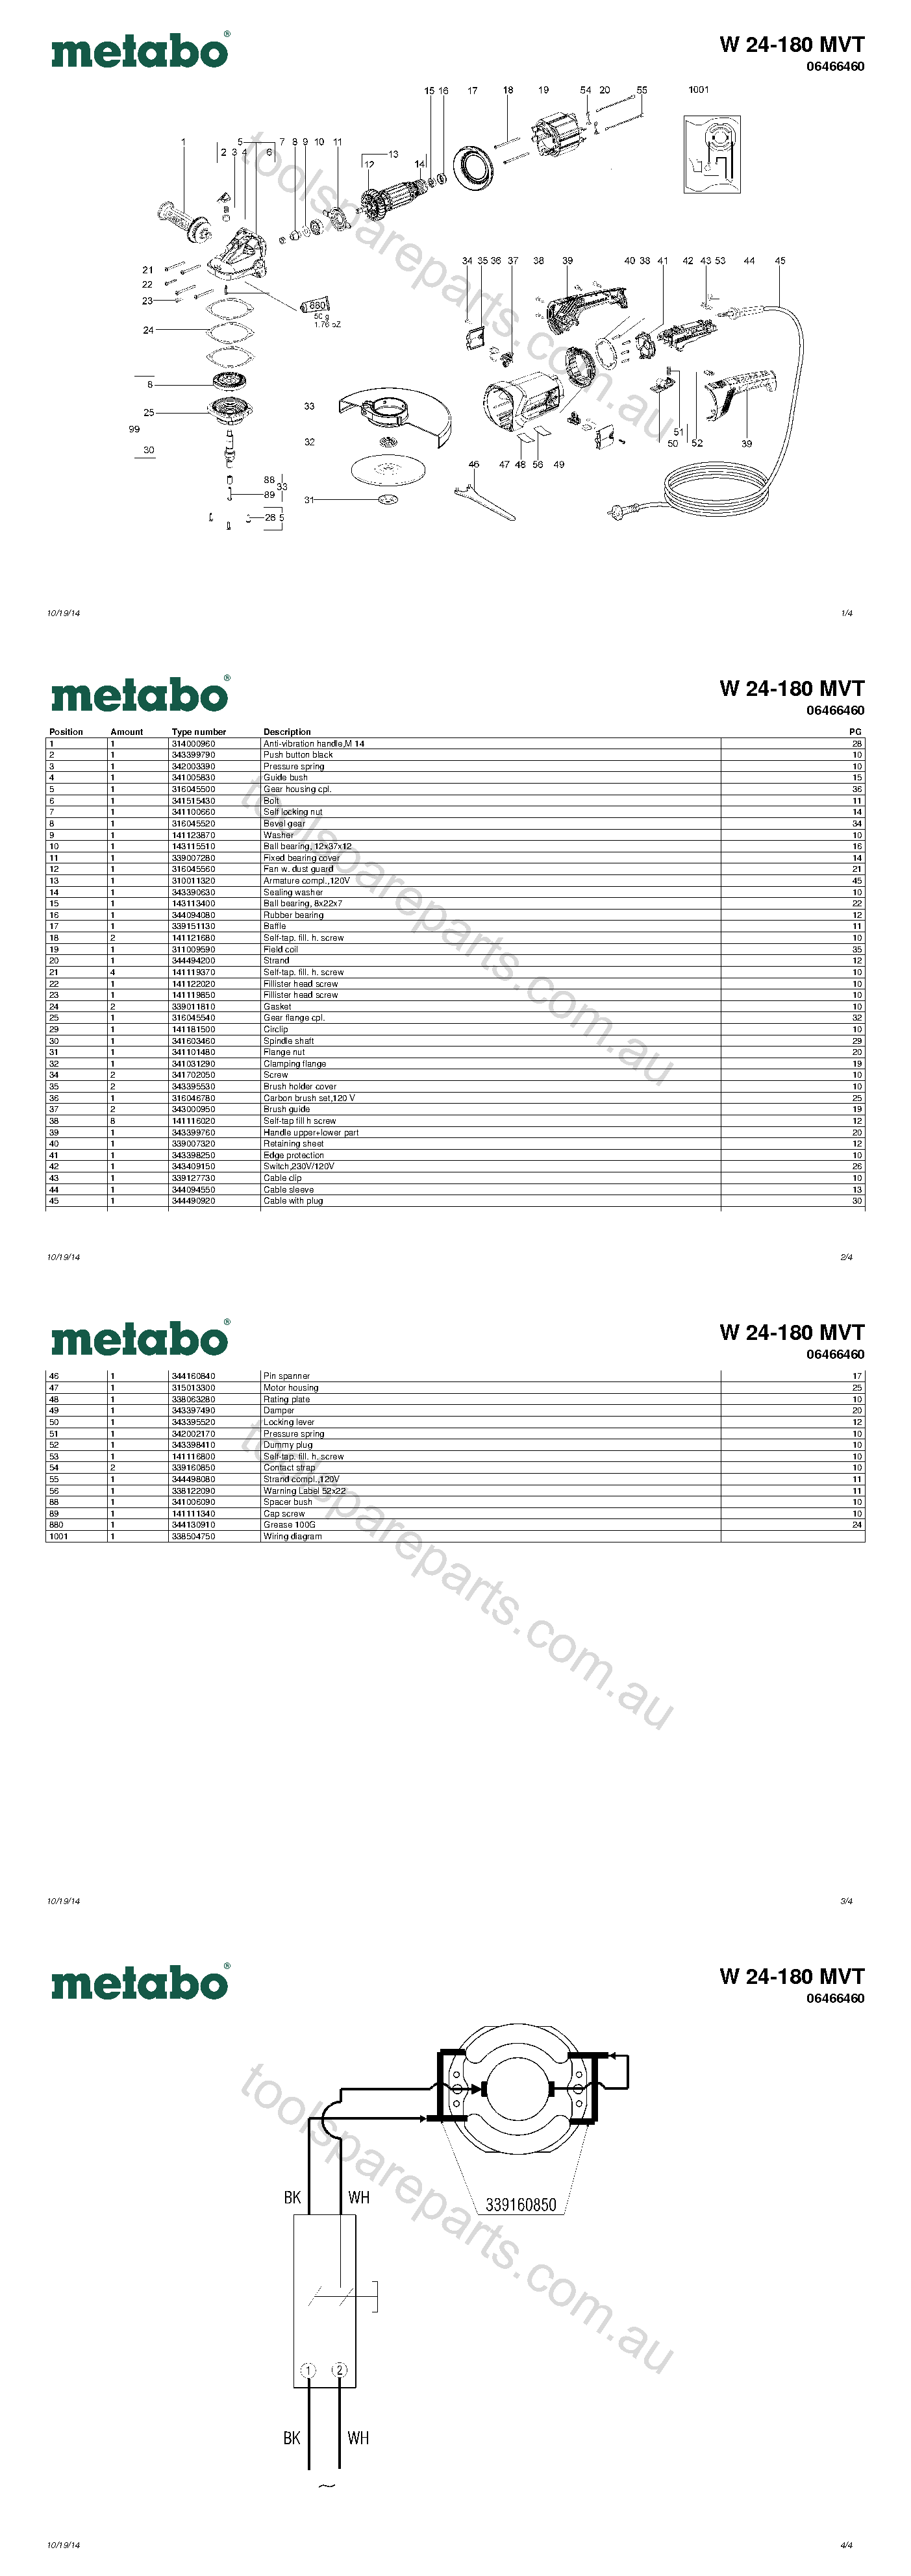 Metabo W 24-180 MVT 06466460  Diagram 1